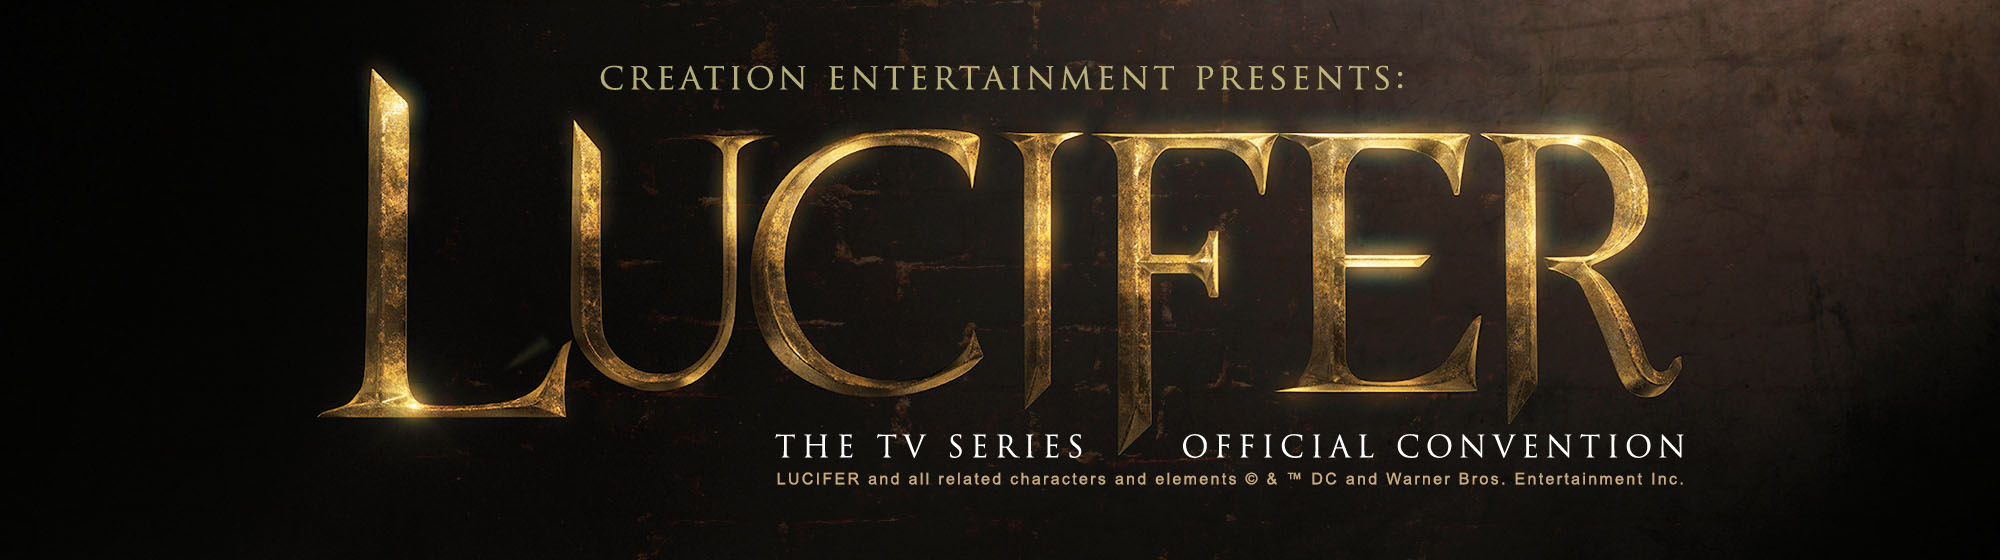 Lucifer TV Series Official Convention Tour